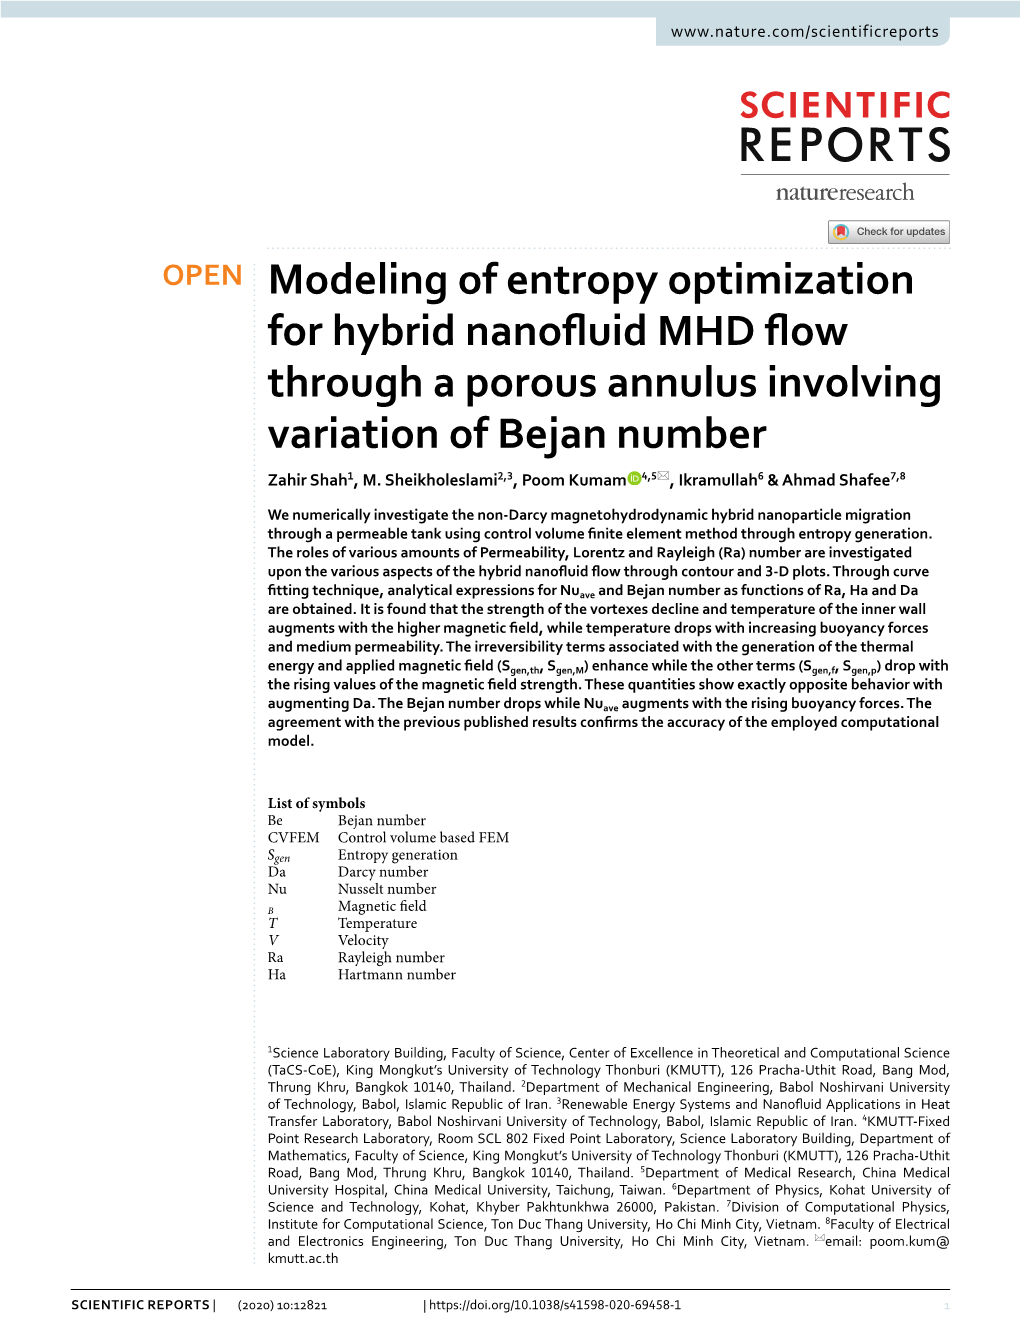 Modeling of Entropy Optimization for Hybrid Nanofluid MHD Flow Through